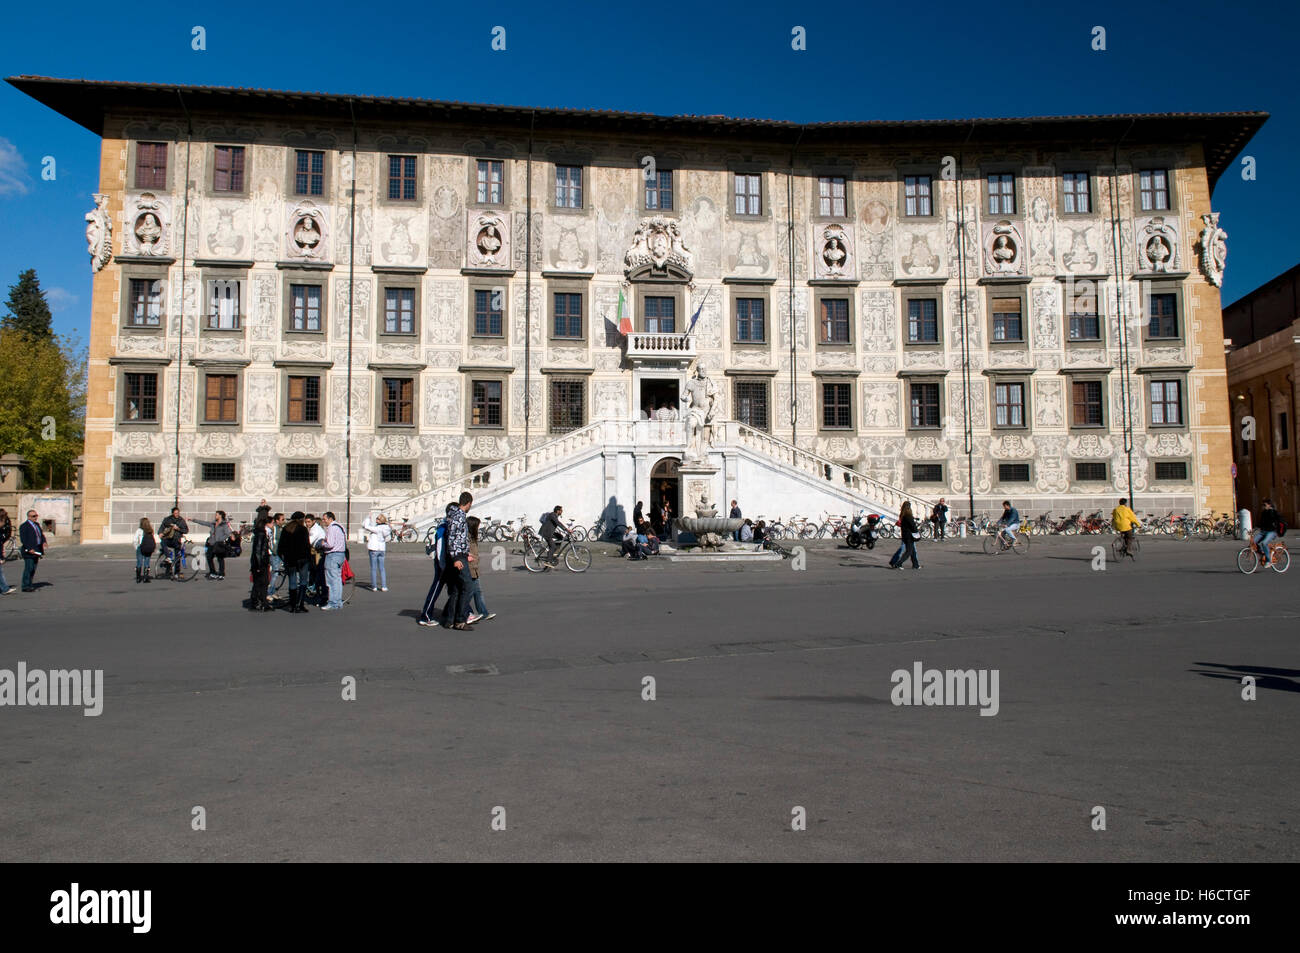 Palazzo dei Cavalieri, an elite university on the Piazza dei Cavalieri square, Pisa, Tuscany, Italy, Europe Stock Photo